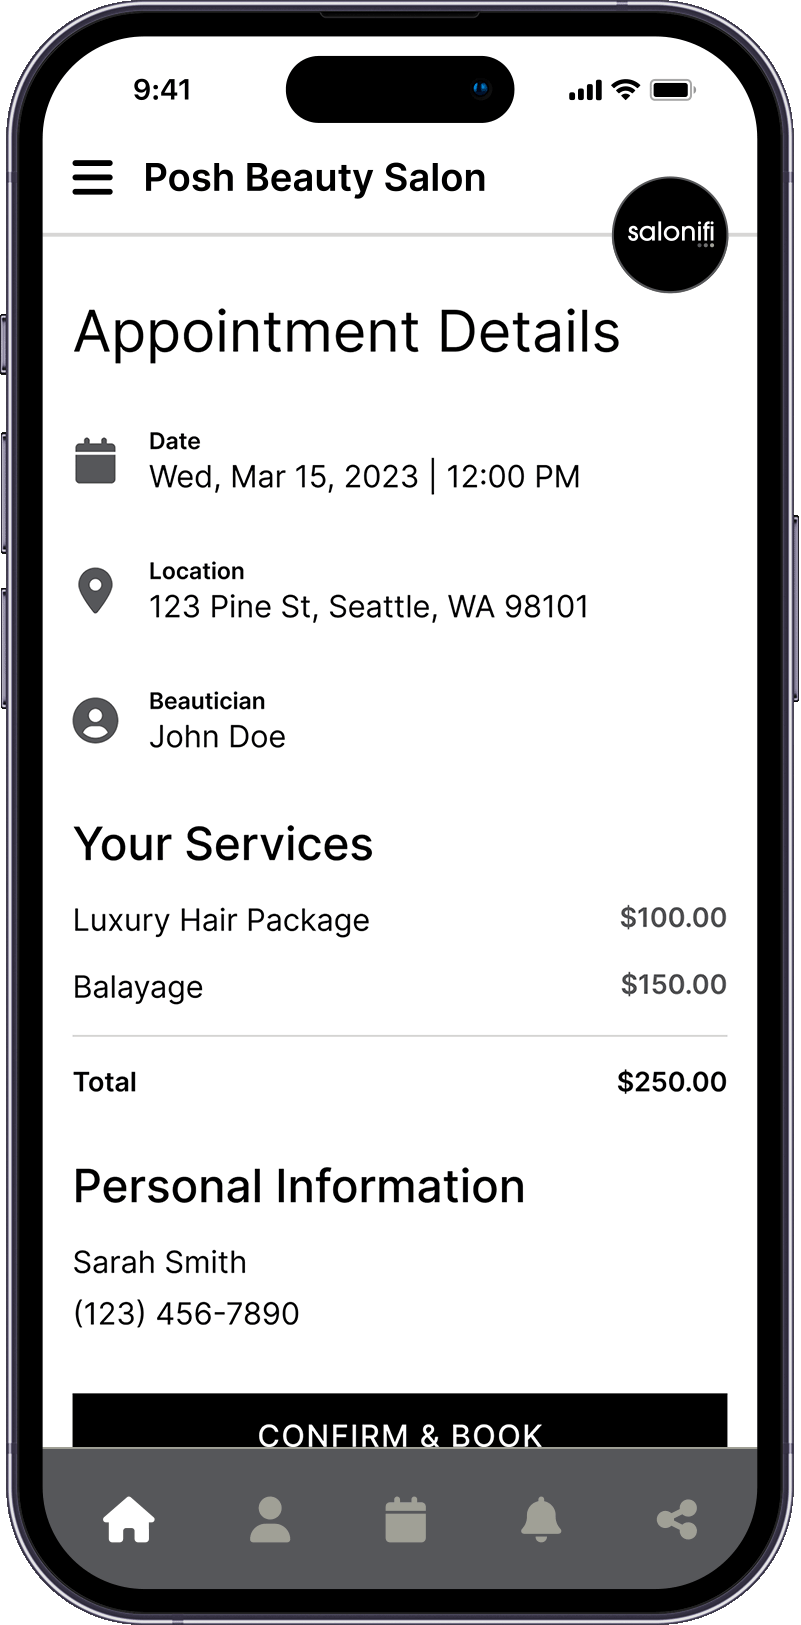 Salonifi redesigned booking details UI